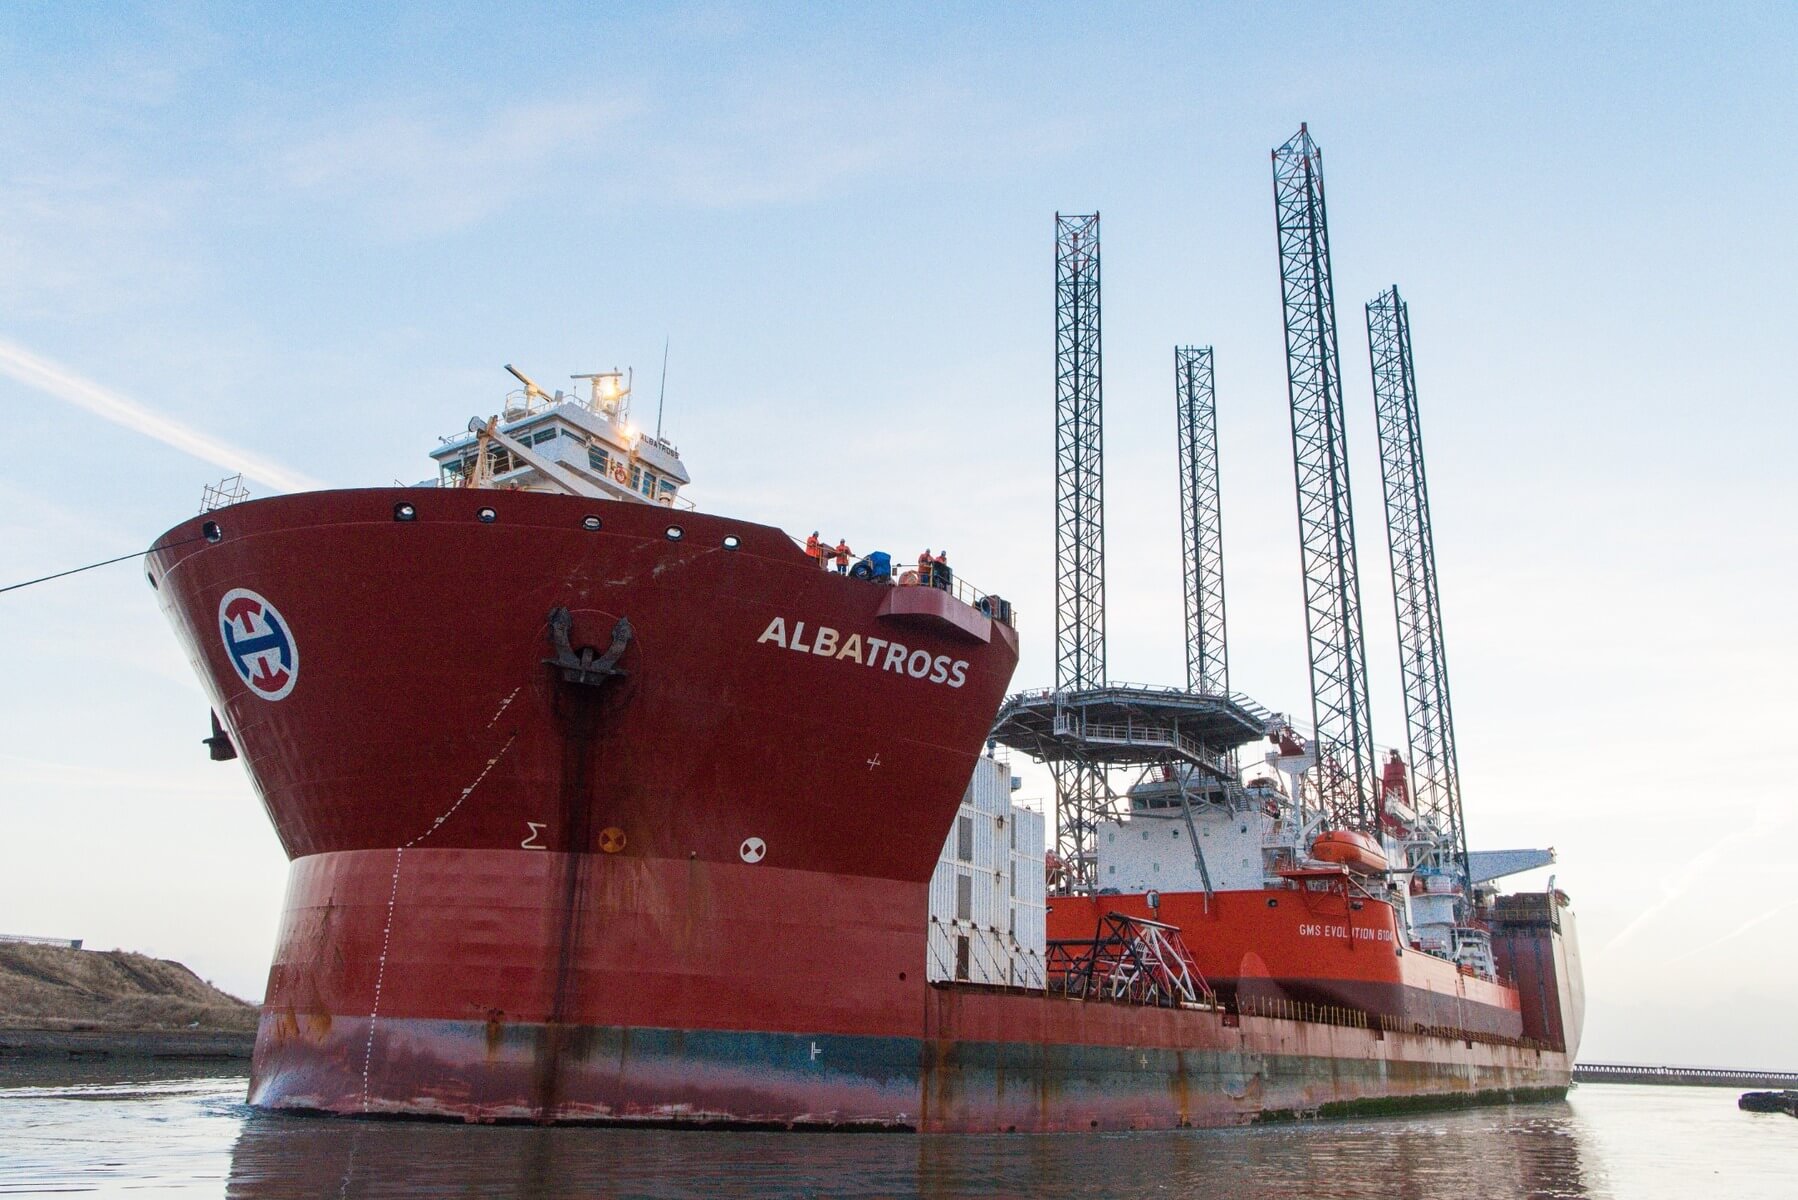 Offshore Heavy Transport vessel Albatross visits Blyth